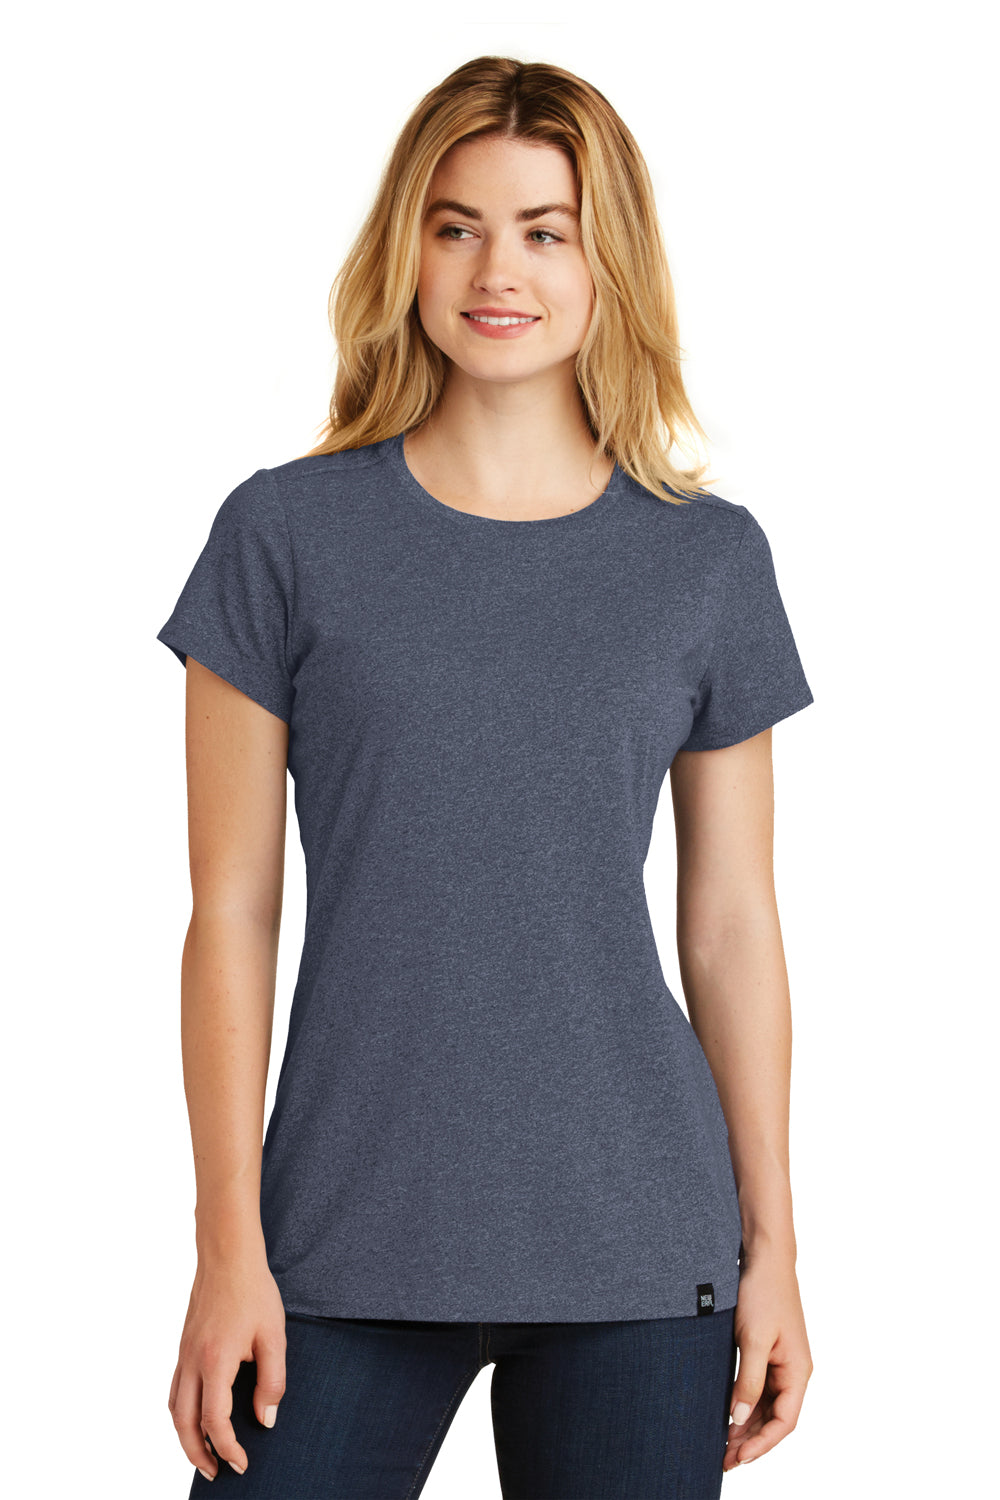 New Era LNEA100 Womens Heritage Short Sleeve Crewneck T-Shirt Heather Navy Blue Front